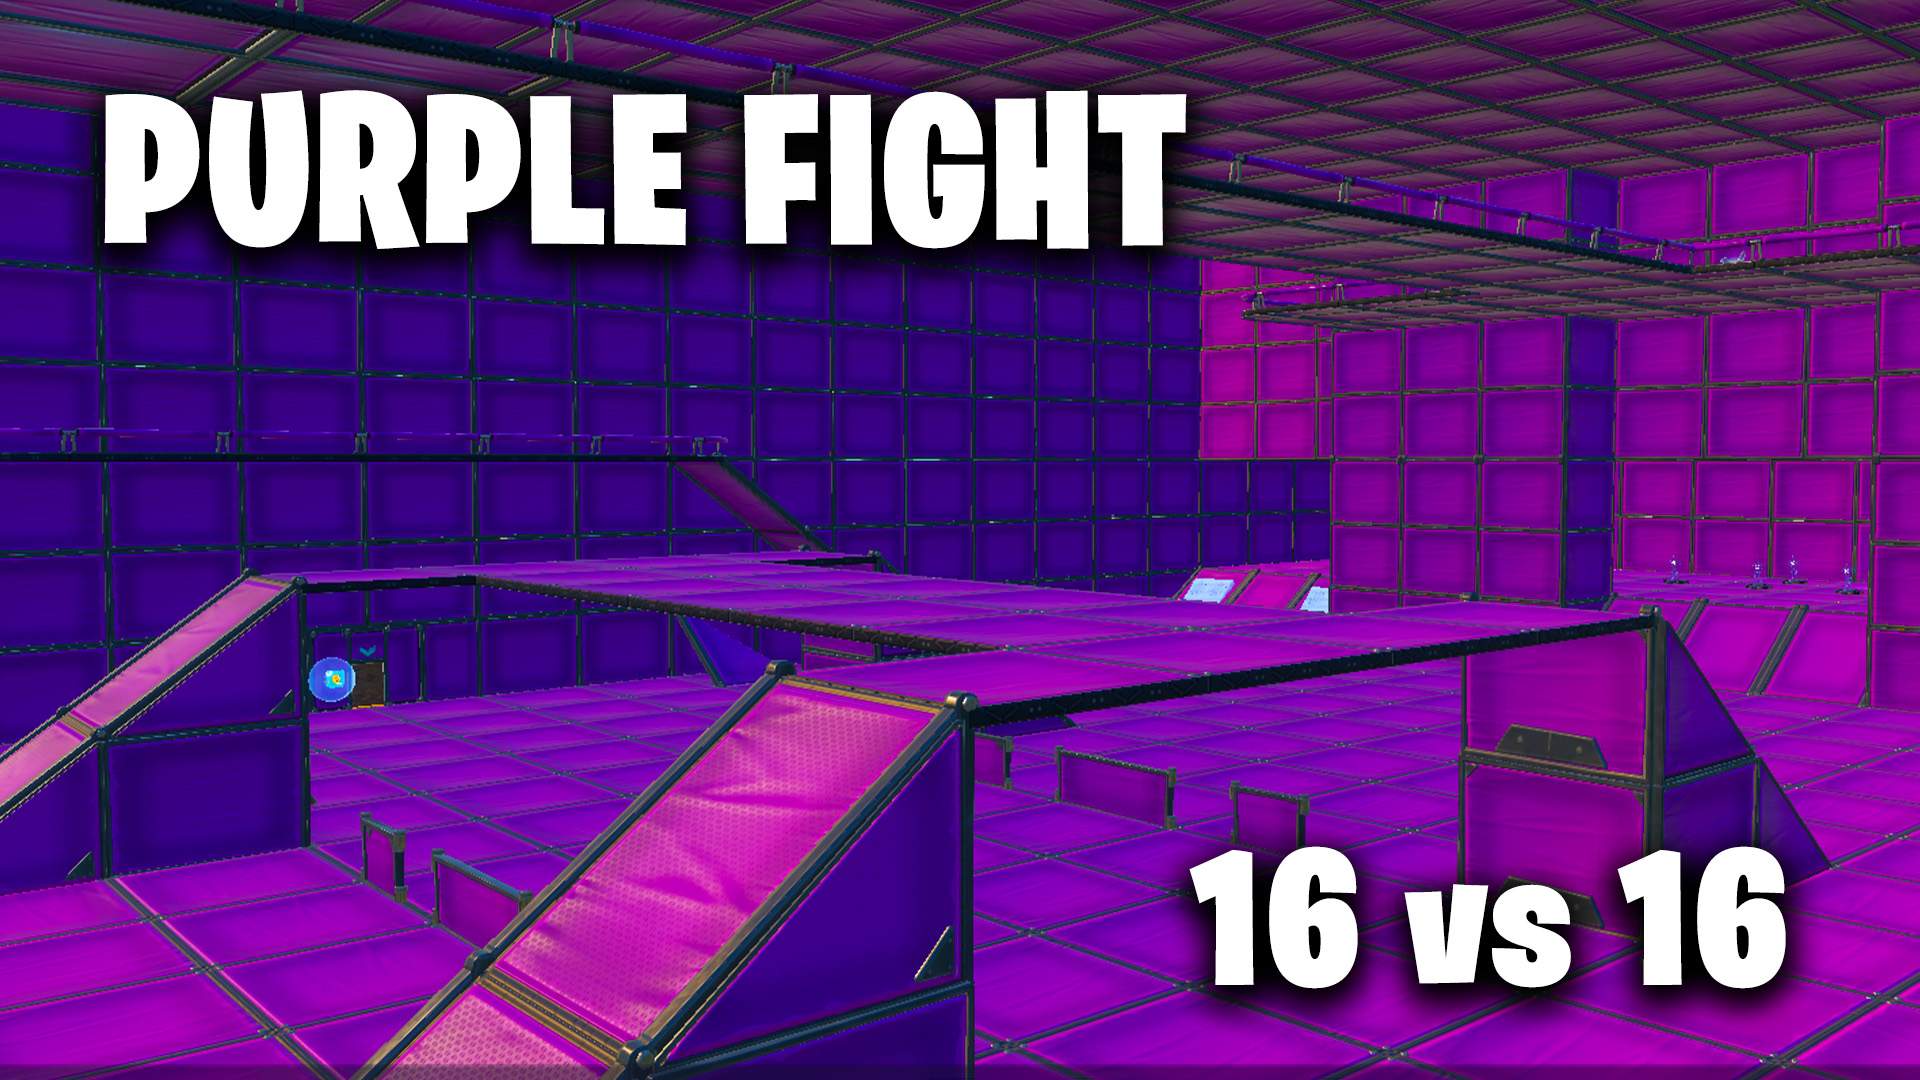 PURPLE FIGHT 16 VS 16